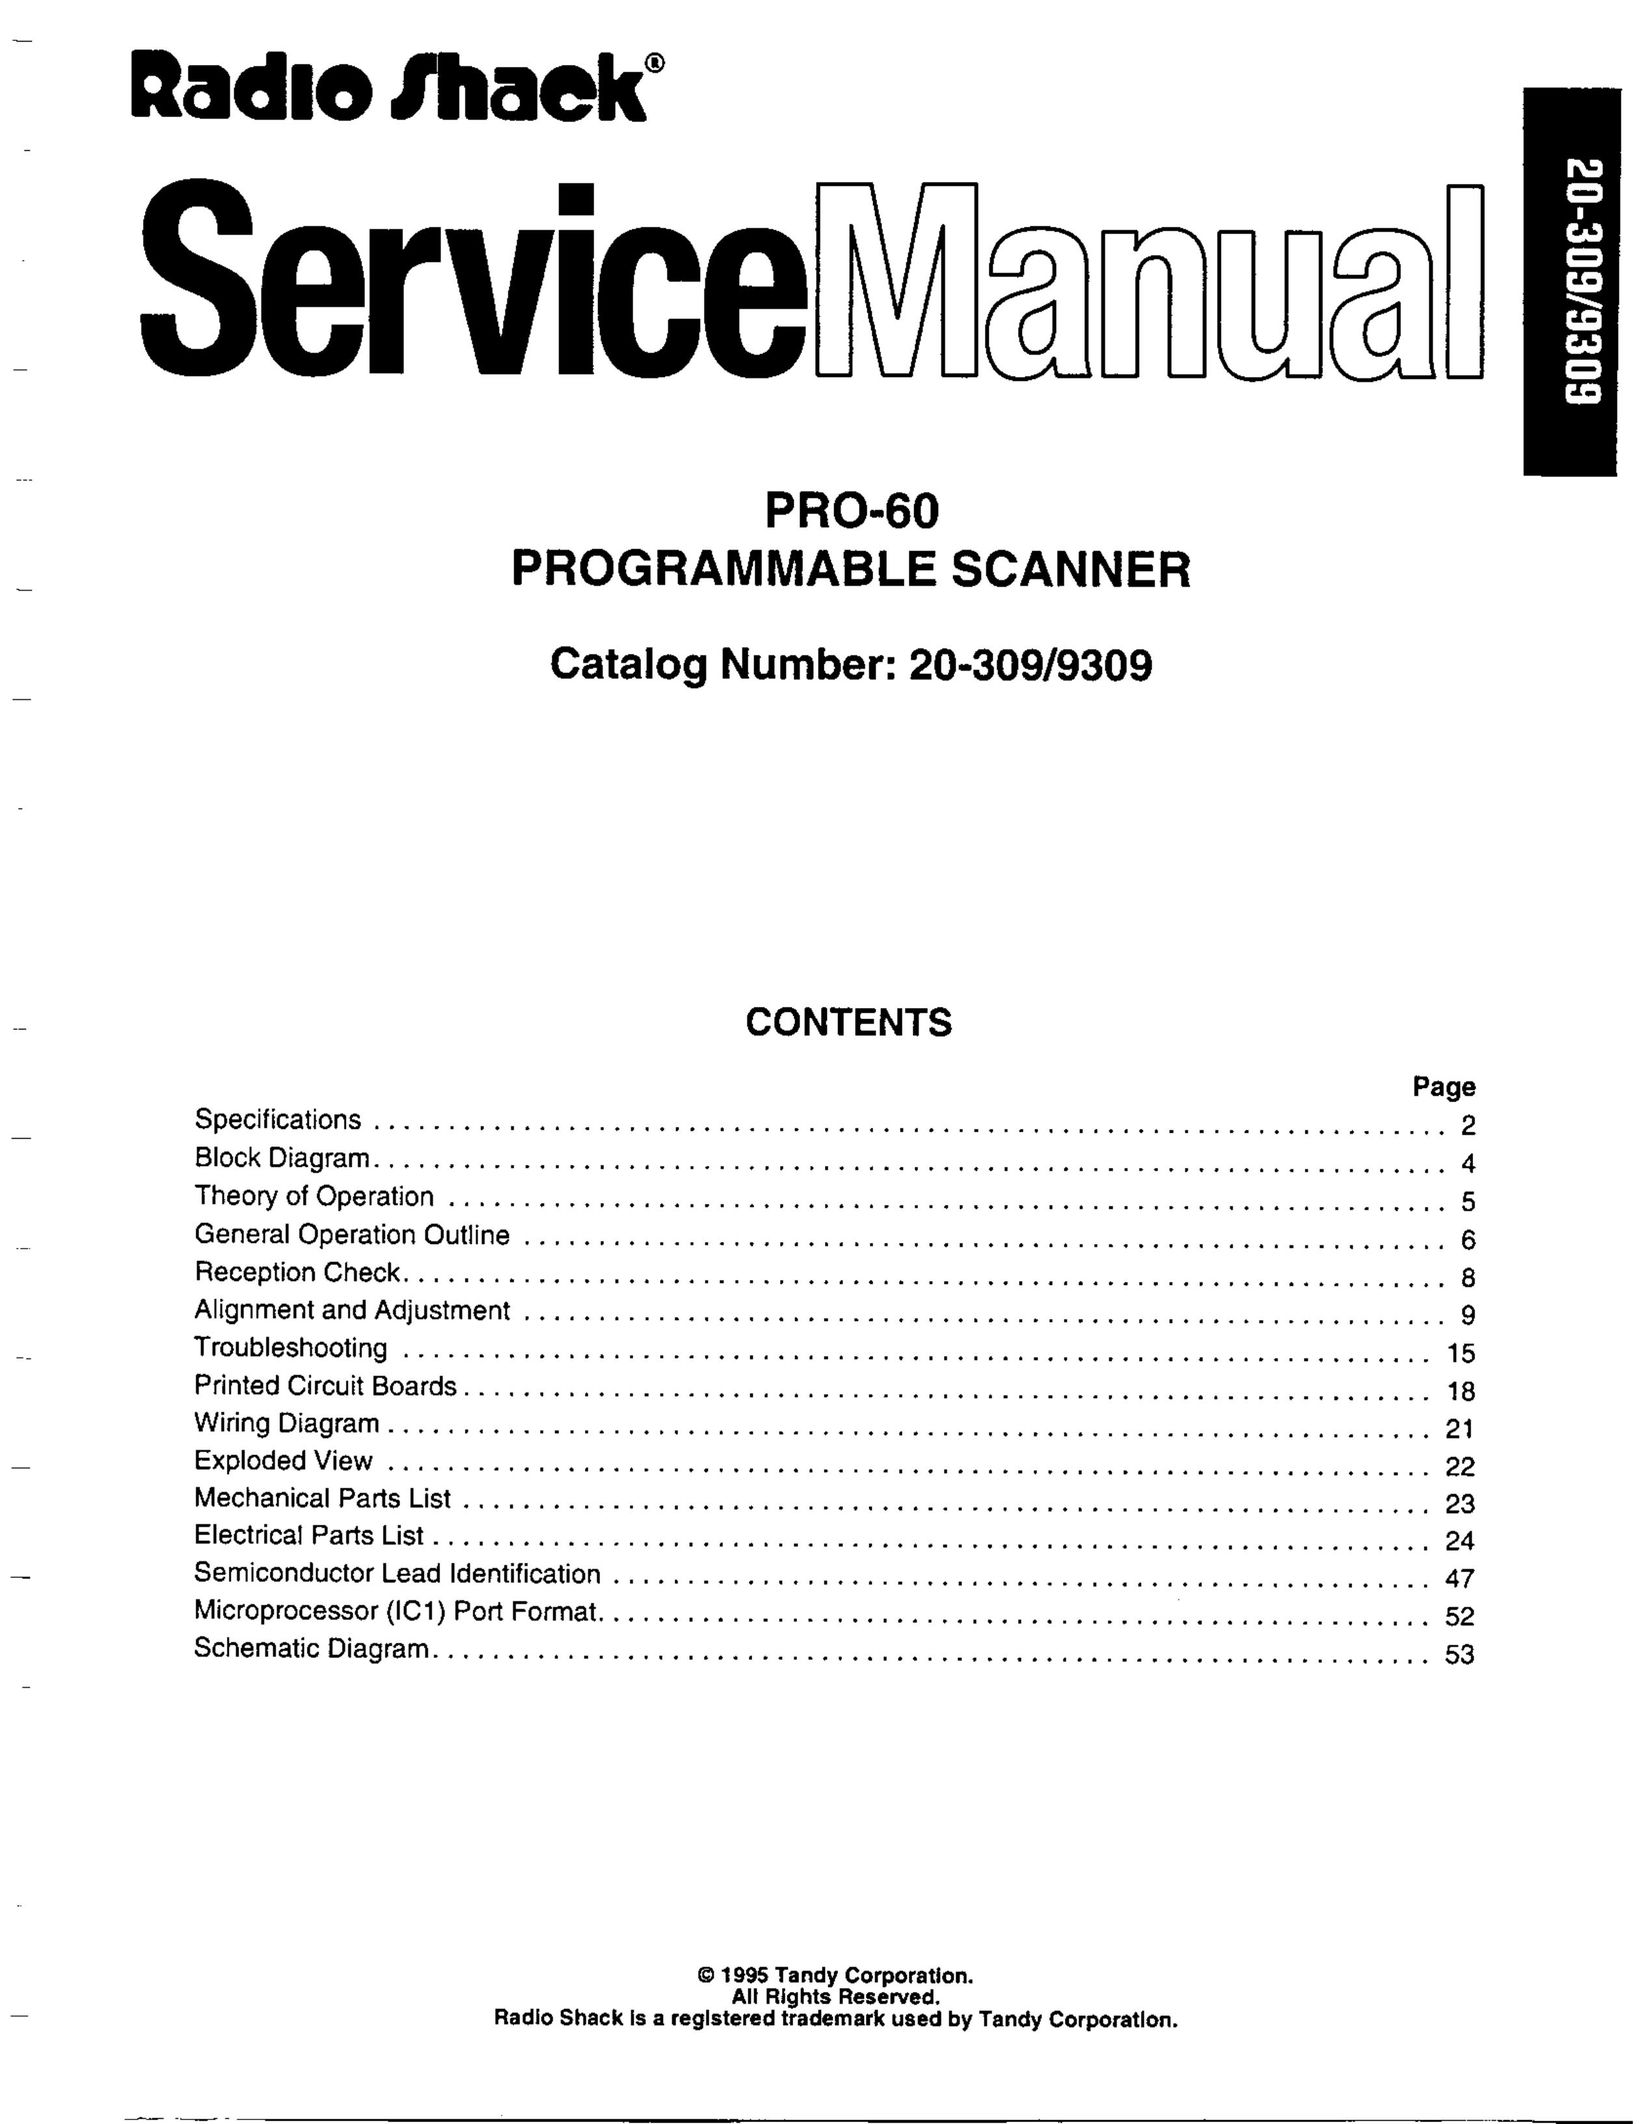 Radio Shack Pro-60 Scanner User Manual